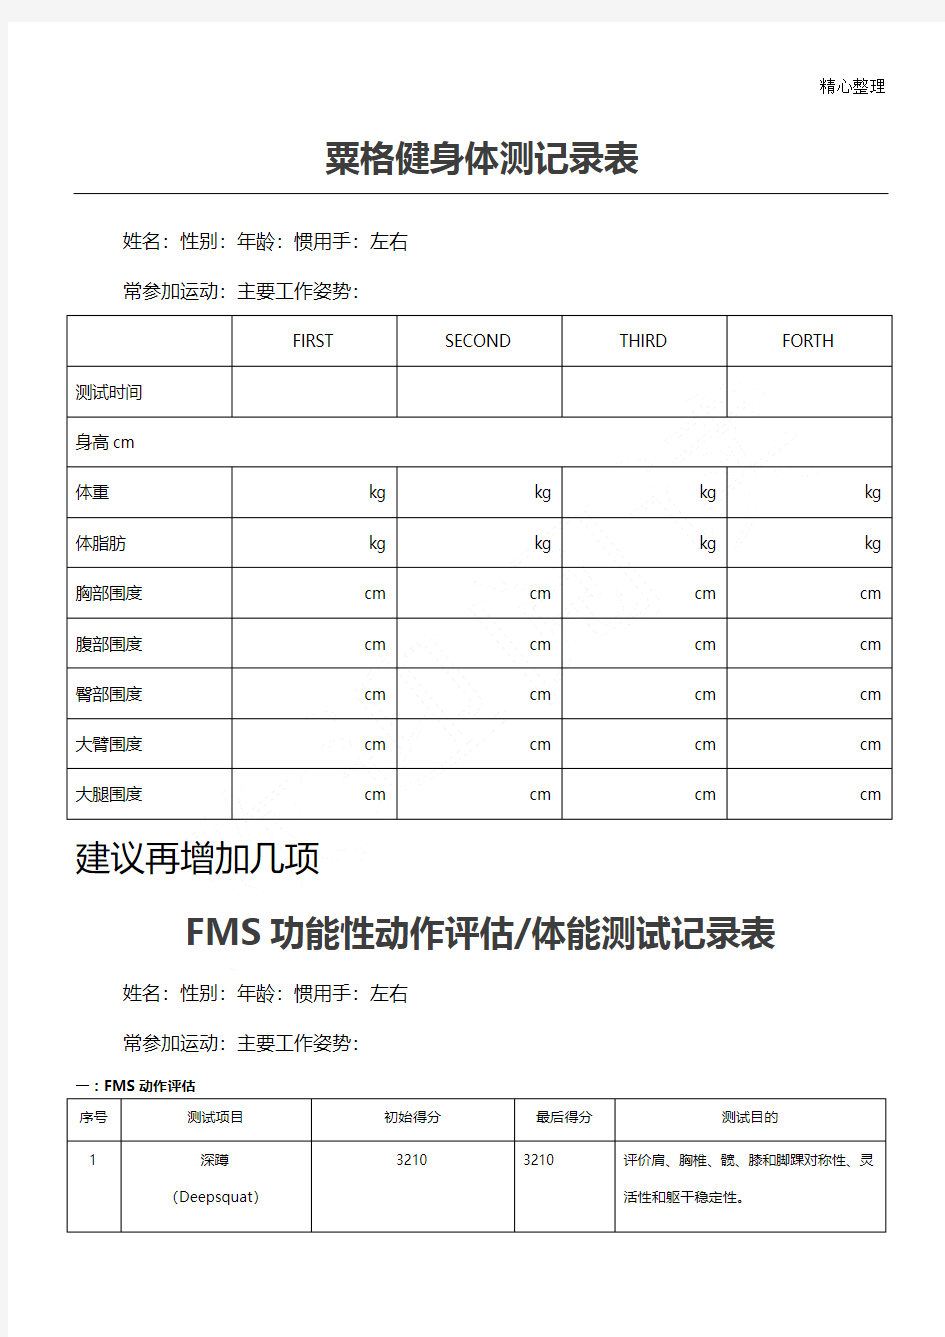 FMS功能性运动筛查测试表